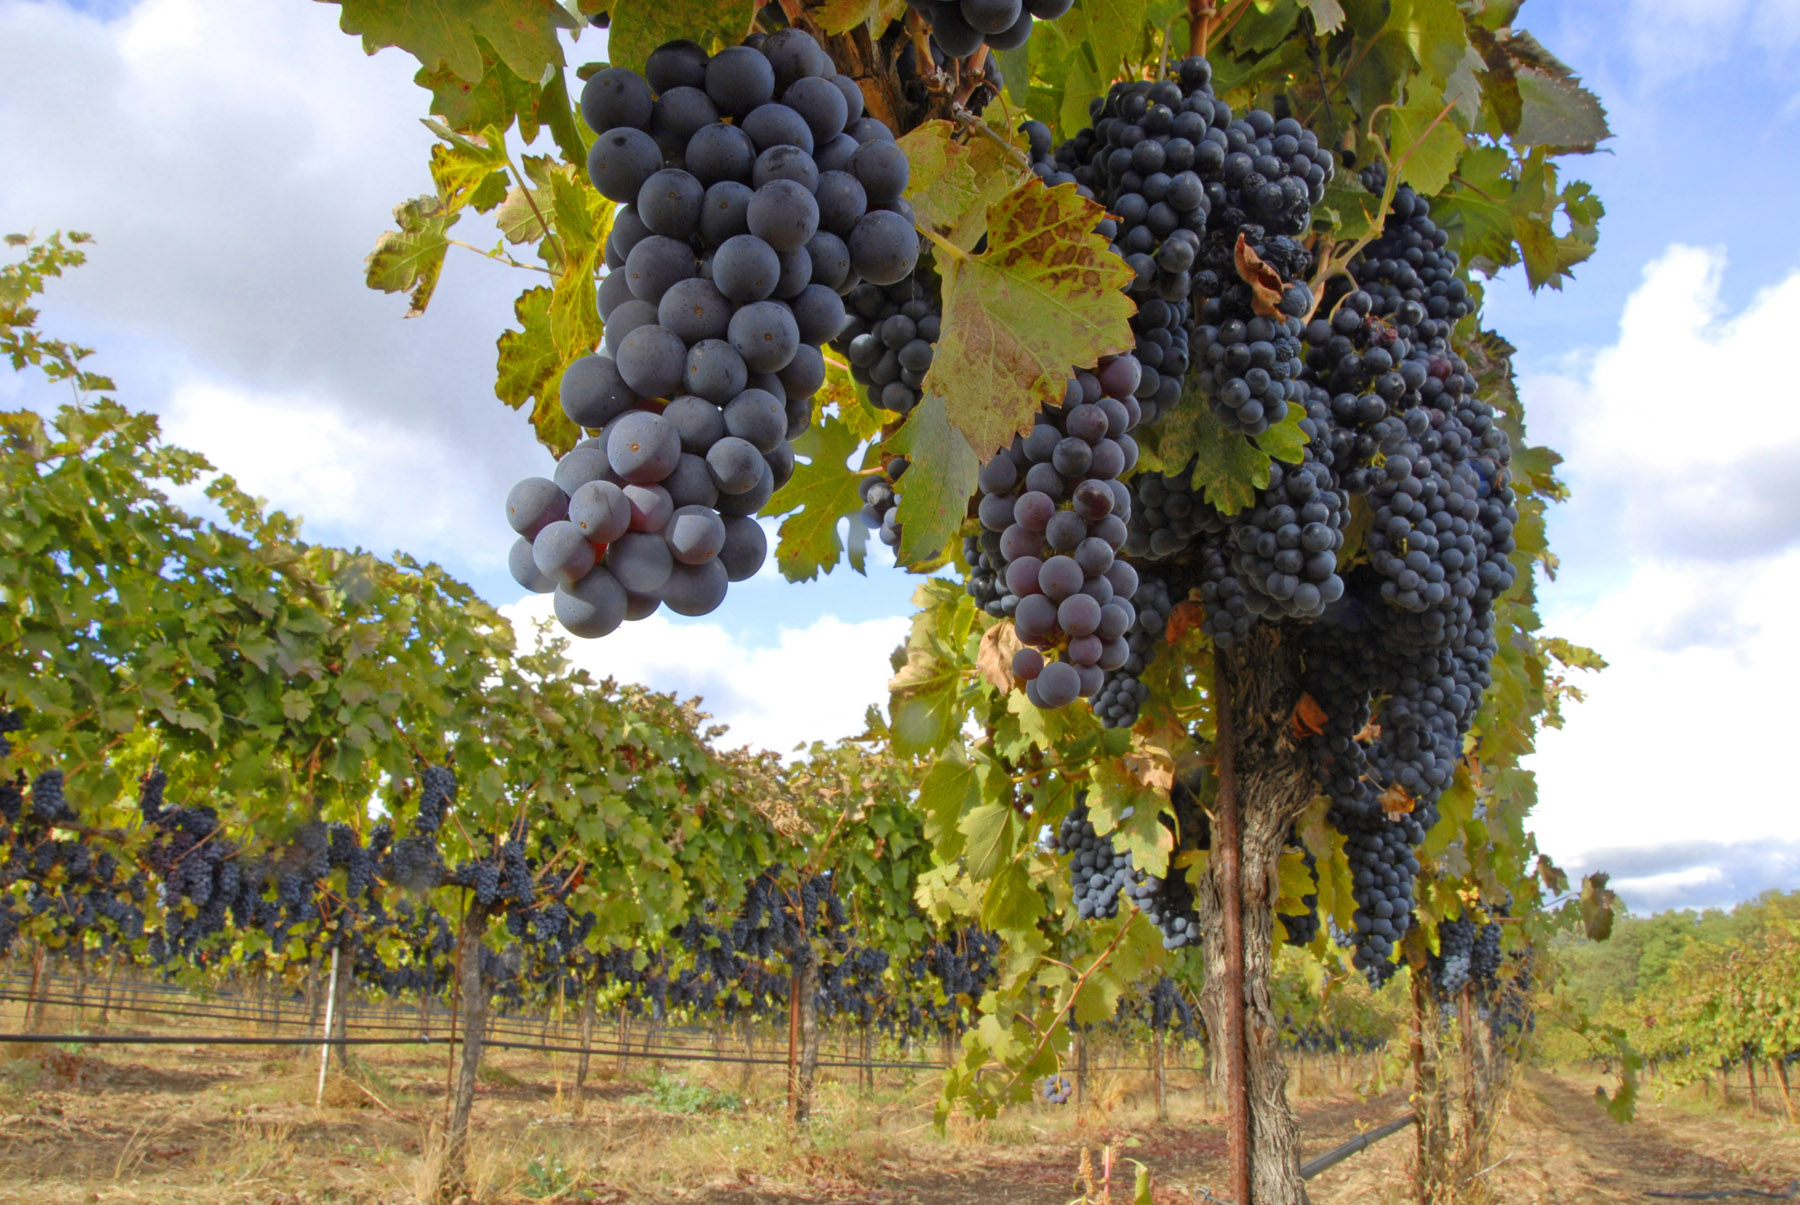 biodynamic winery - winery - vineyard - biodynamic wine - biodynamic winemaking - organic winery - organic vineyard - organic wine - organic winery